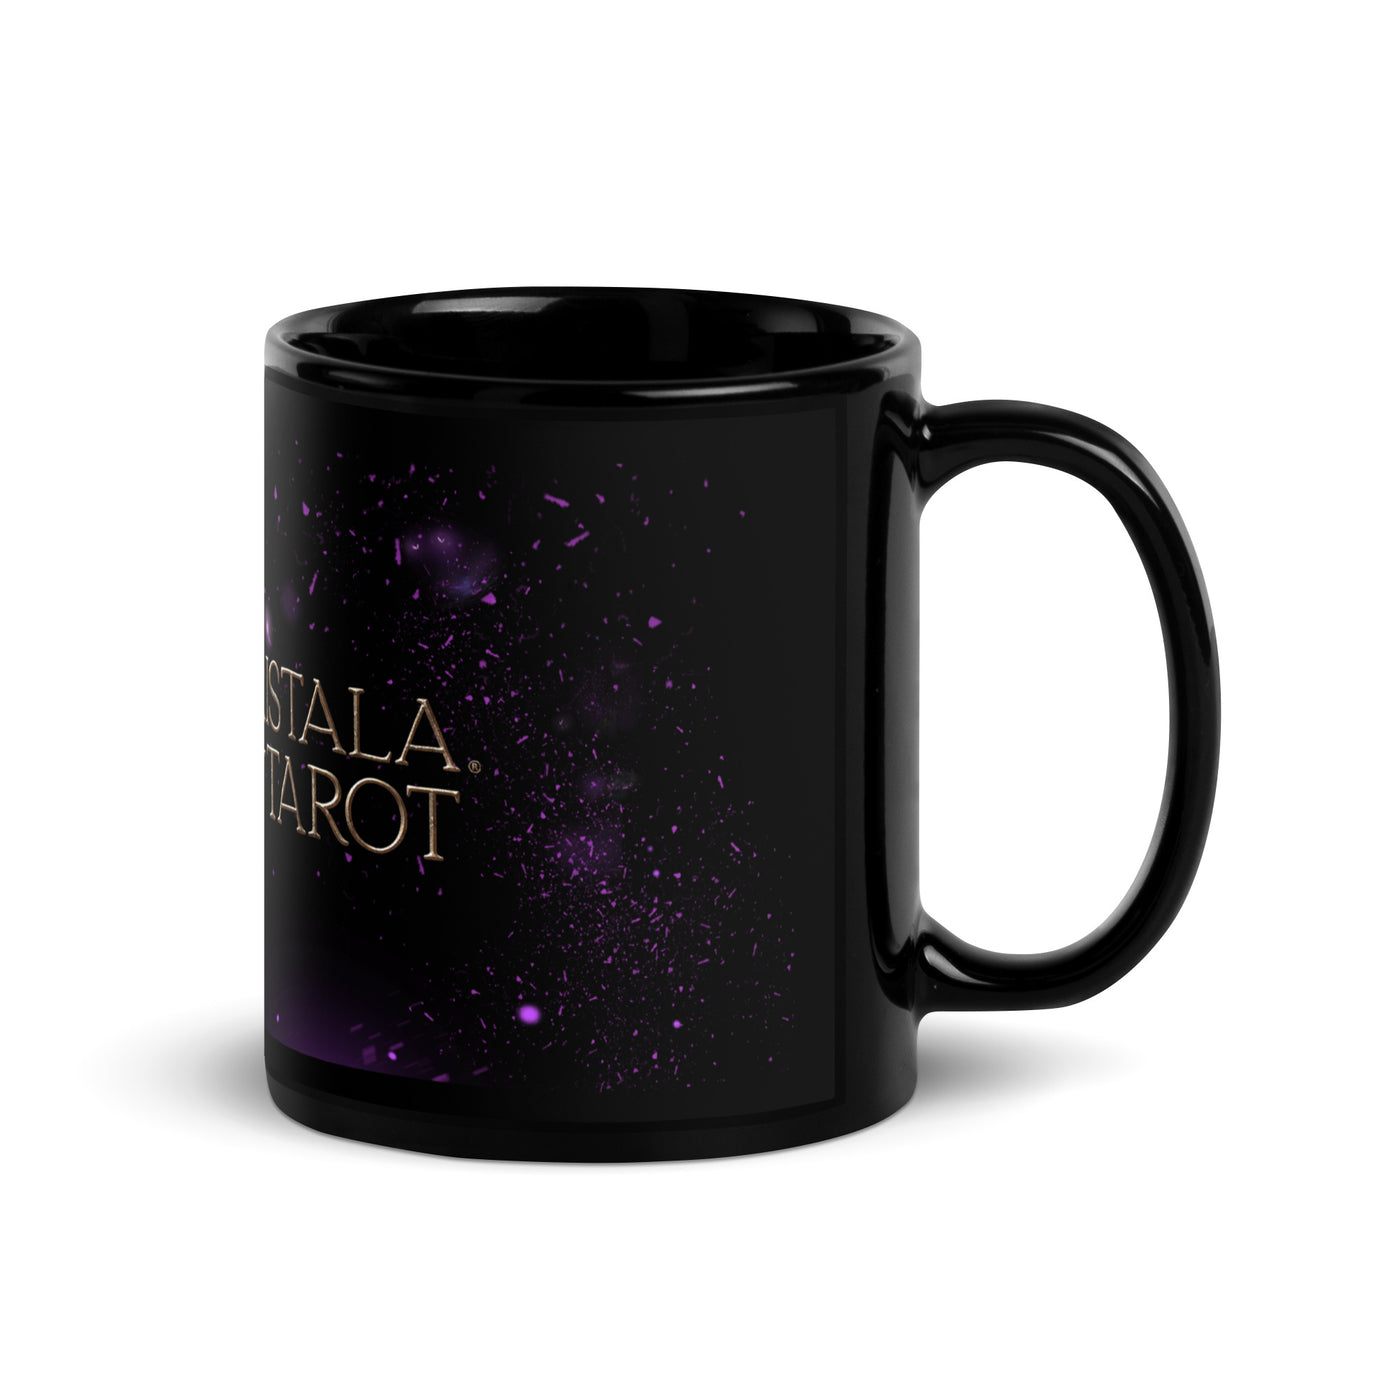 side view of black ceramic coffee mug tea or tea mug with glossy finish and kristala tarot golden logo and purple glowy particles